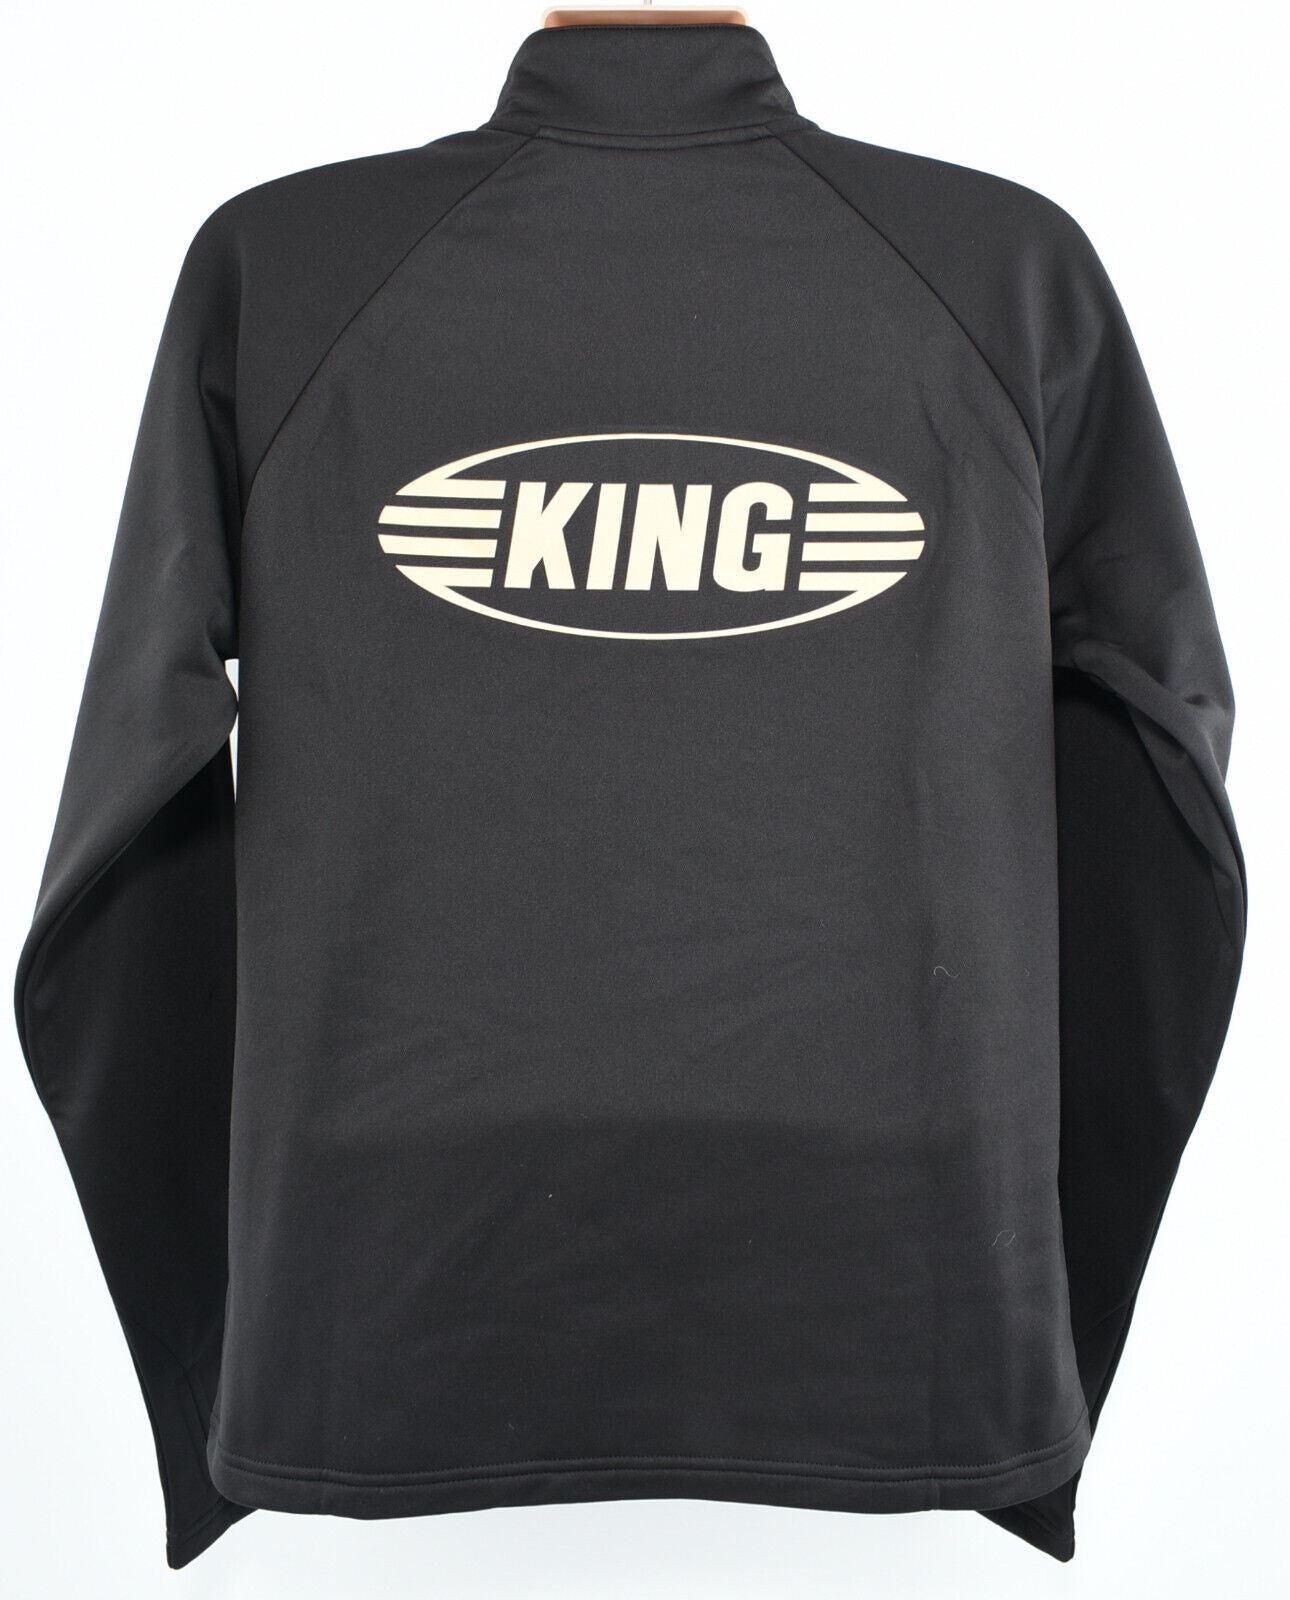 PUMA Men's KING WarmCell 1/2 Zip Sweatshirt, Black/Gold, size LARGE